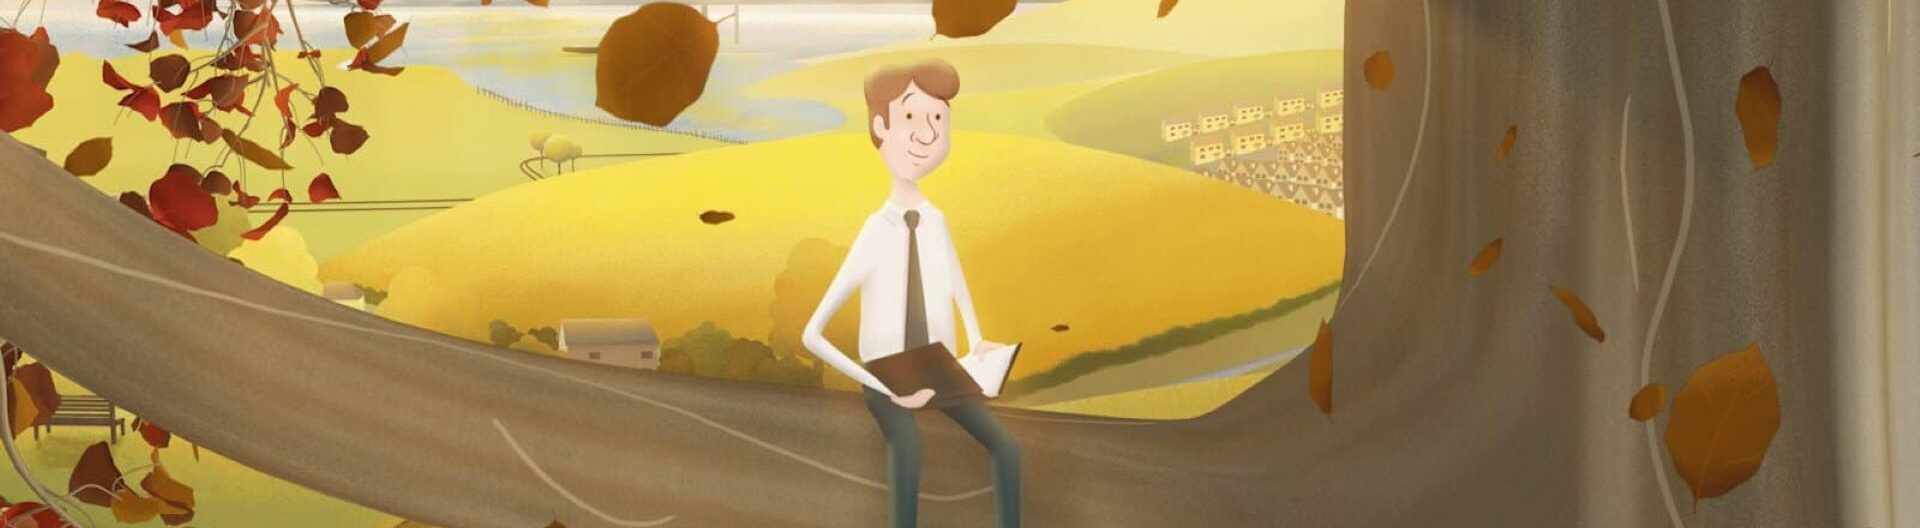 wyelands bank animated brand video case study